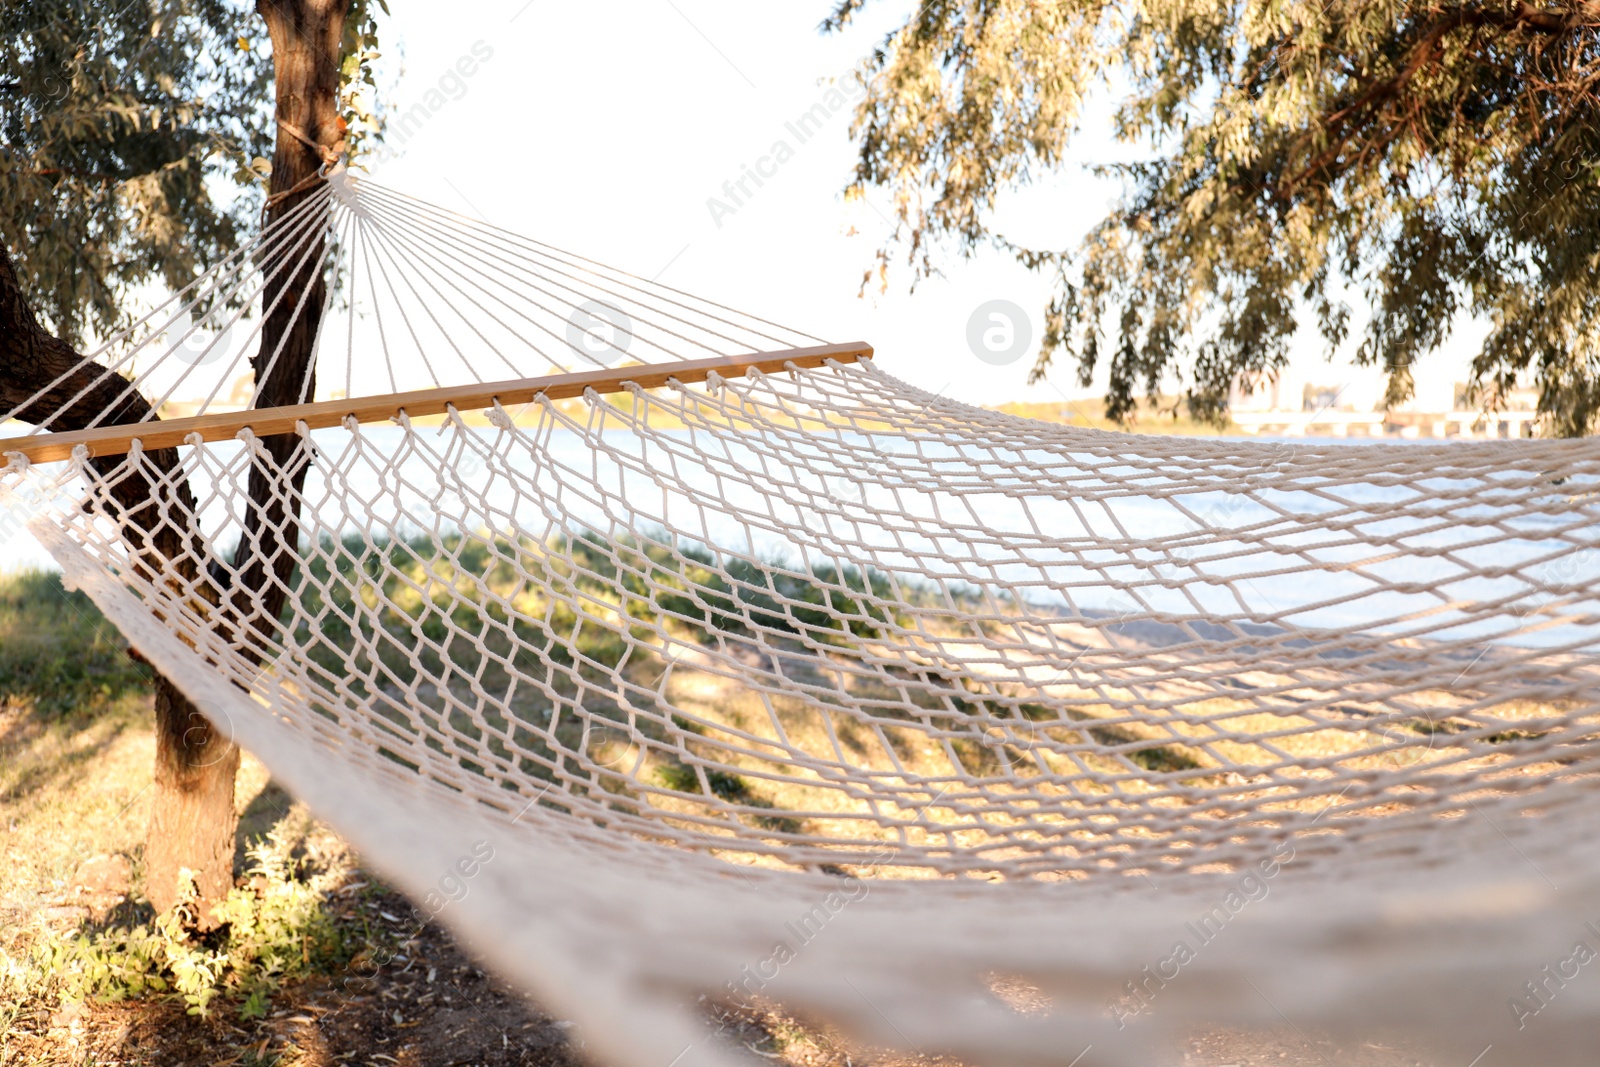 Photo of Comfortable hammock on beach, closeup. Summer vacation